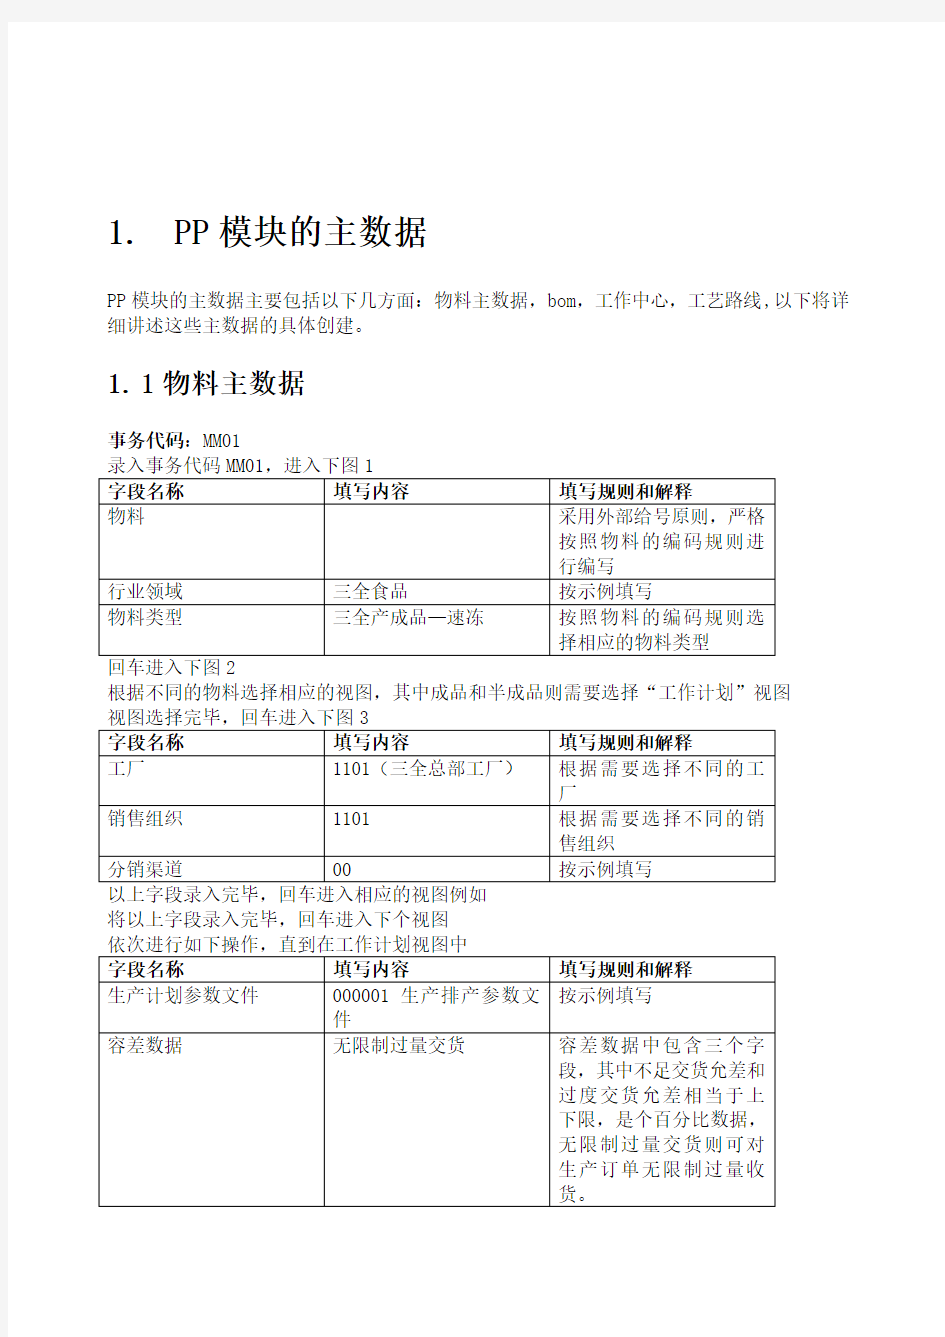 PP标准流程操作手册